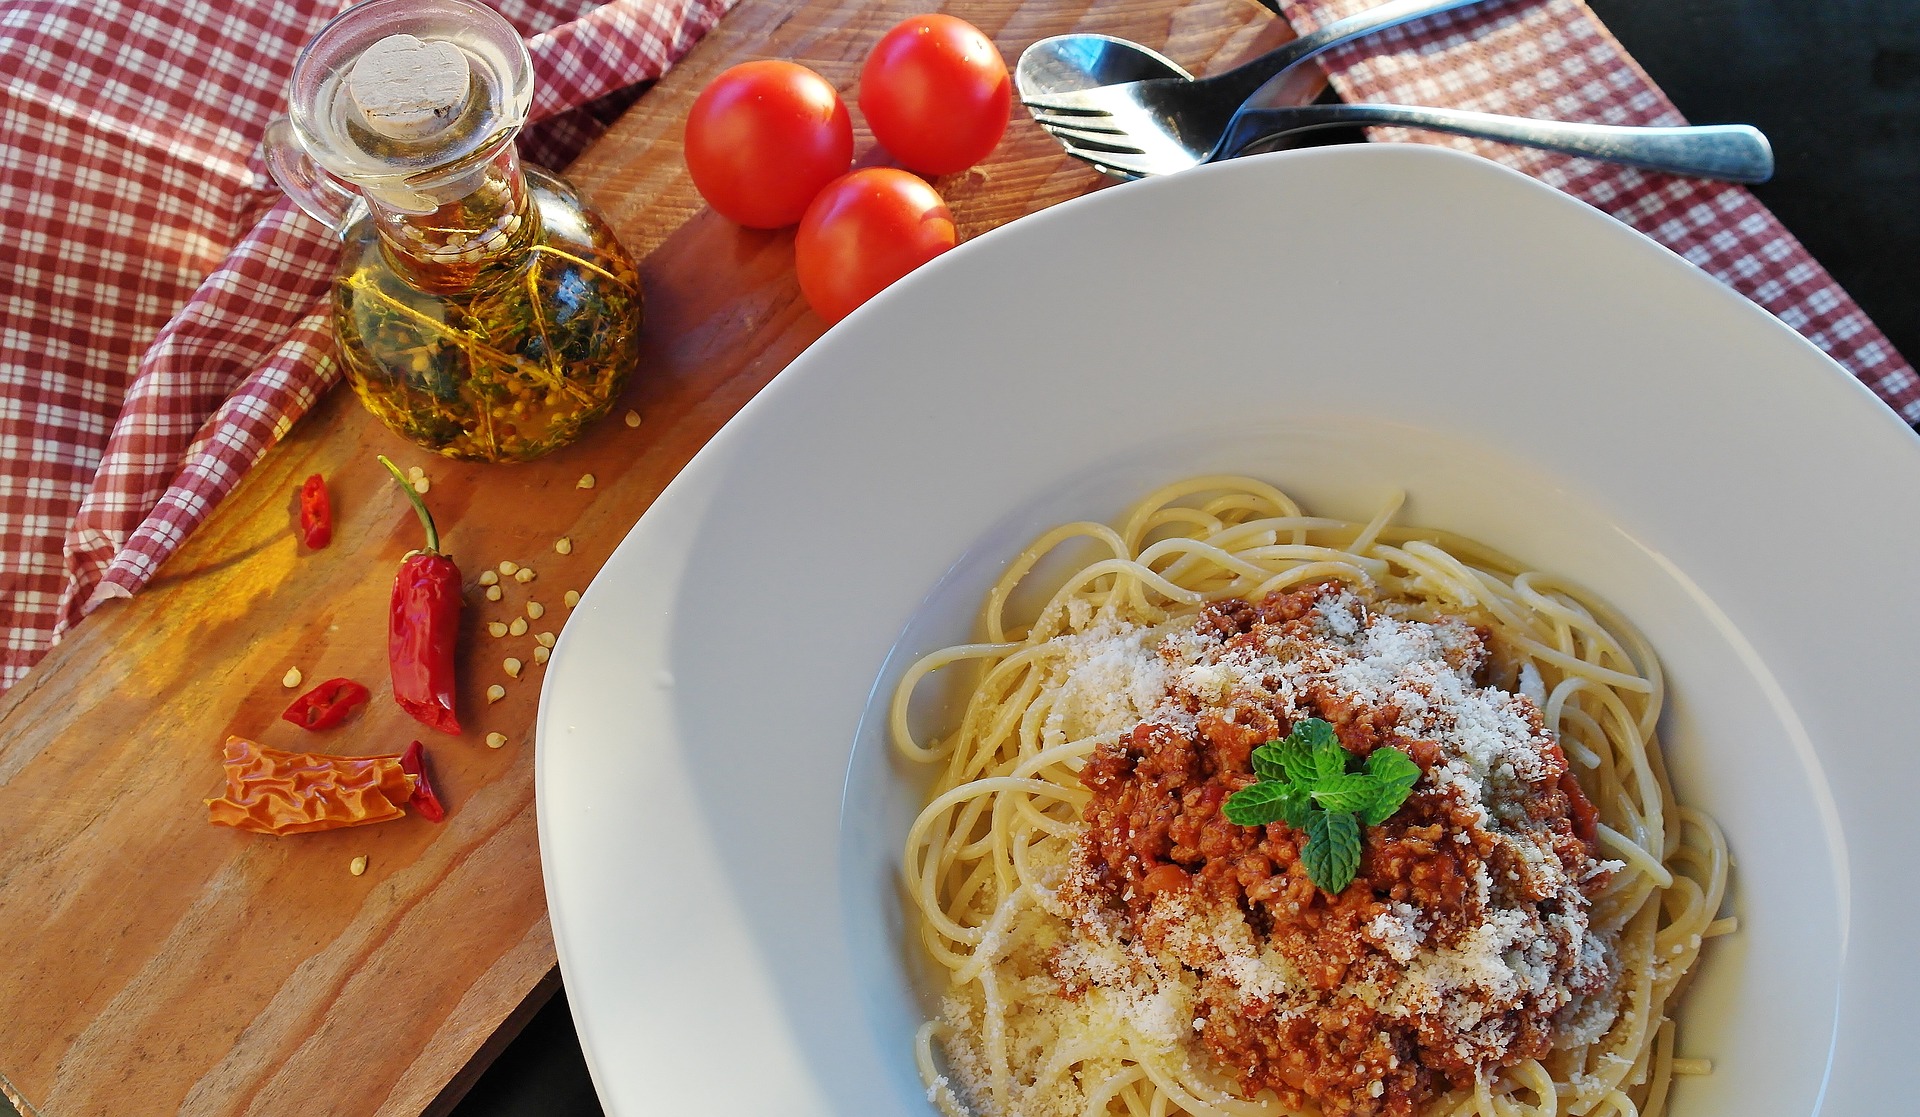 madlavning, indretning, tomater, pasta, kødsovs